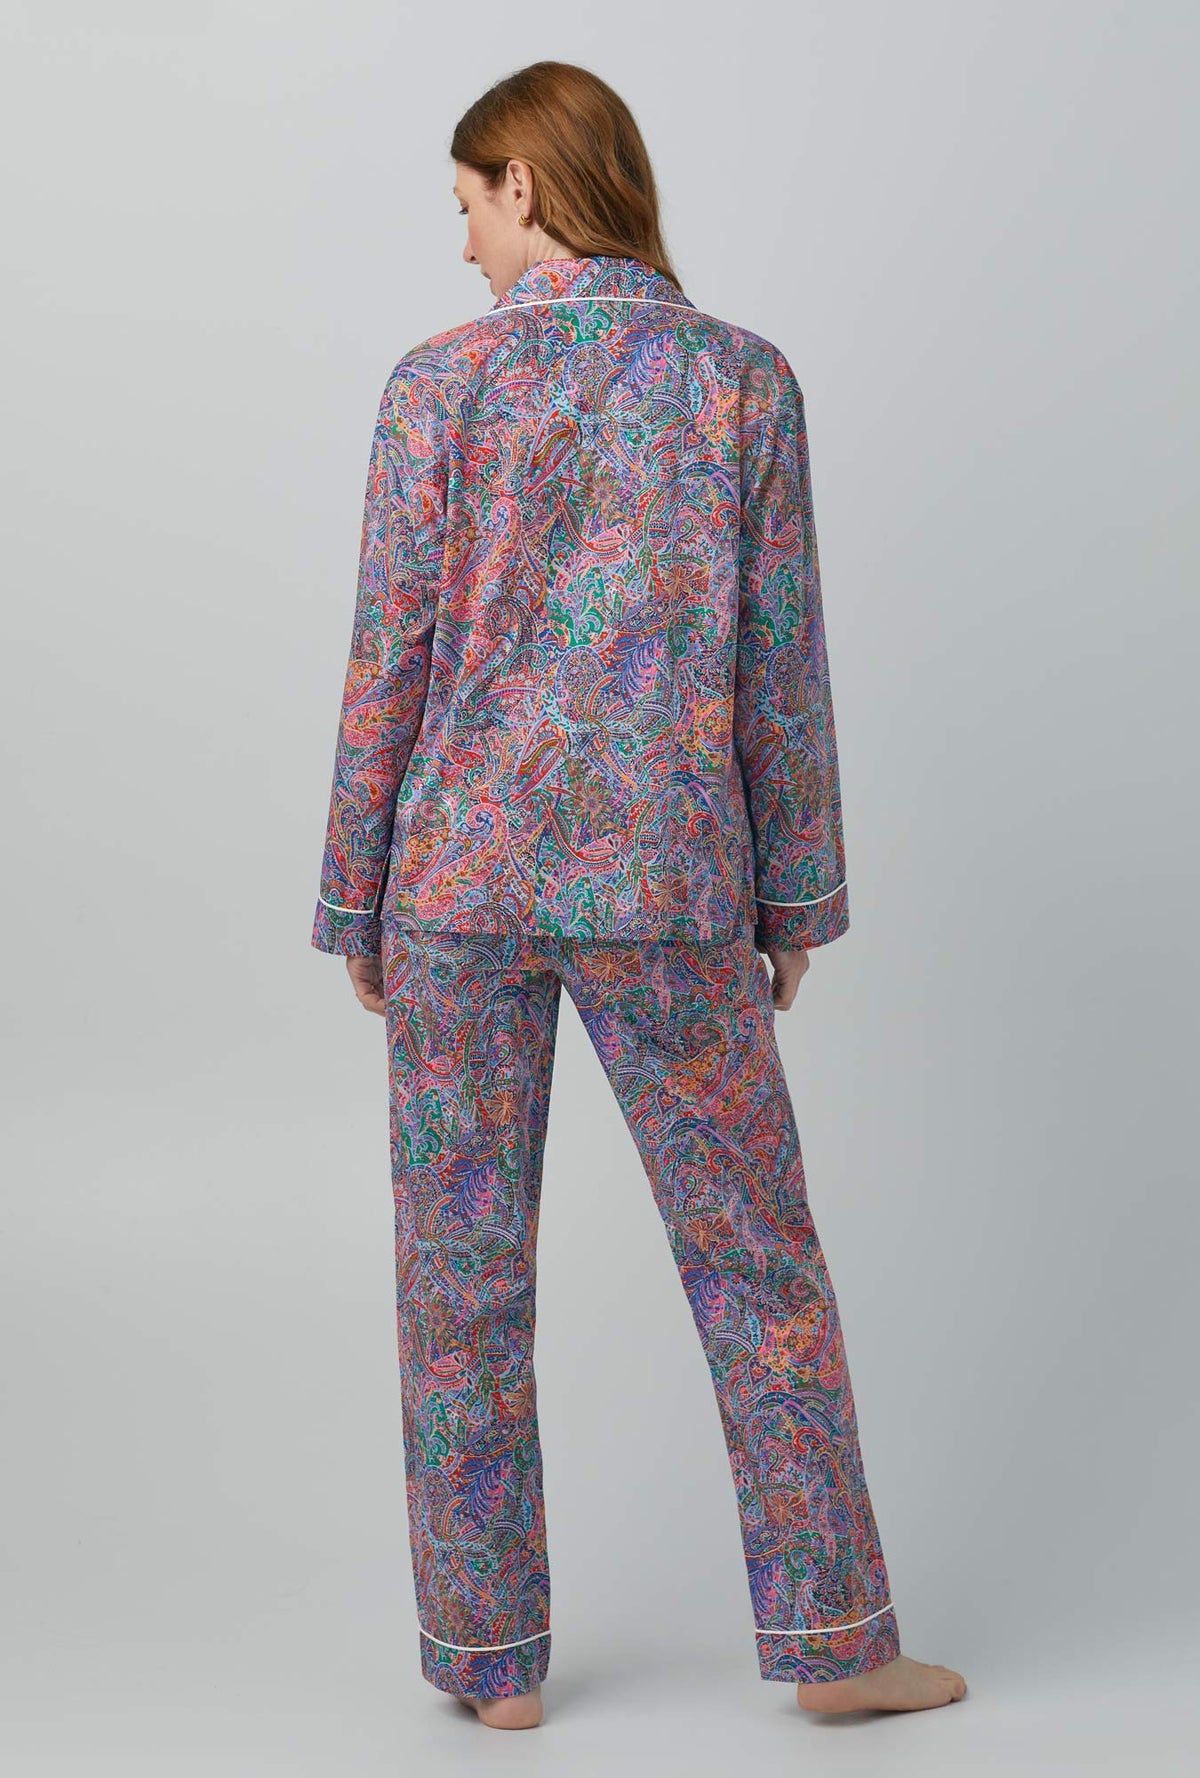 A lady wearing Dana Sharmin Long Sleeve Classic Woven Cotton Tana Lawn® PJ Set Made with Liberty Fabrics